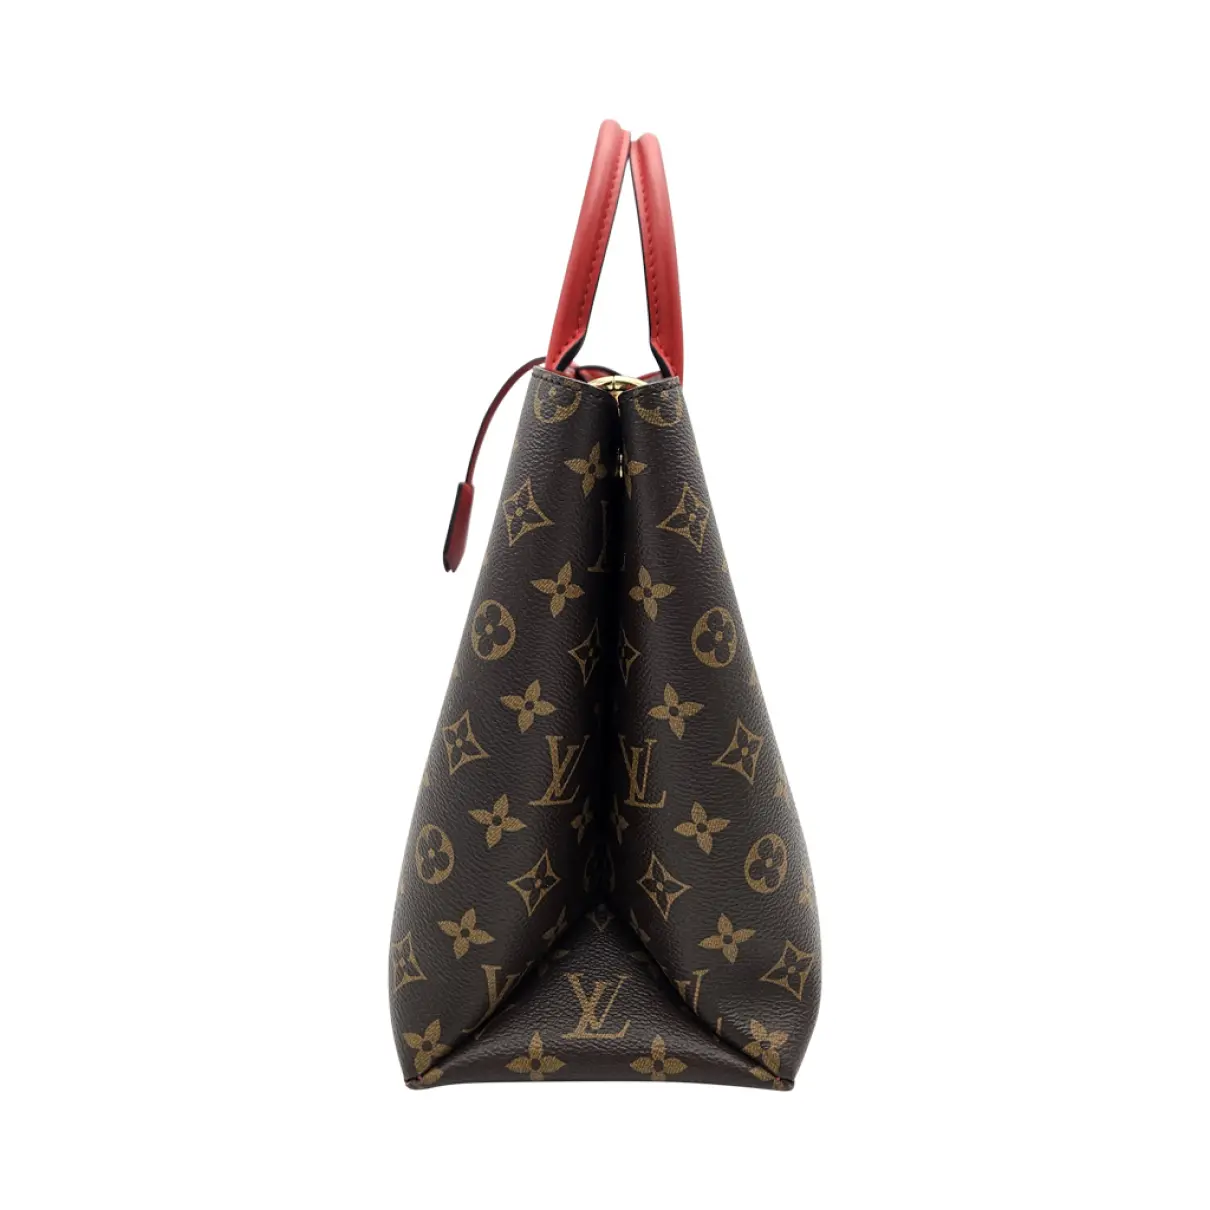 Flower Tote leather handbag Louis Vuitton